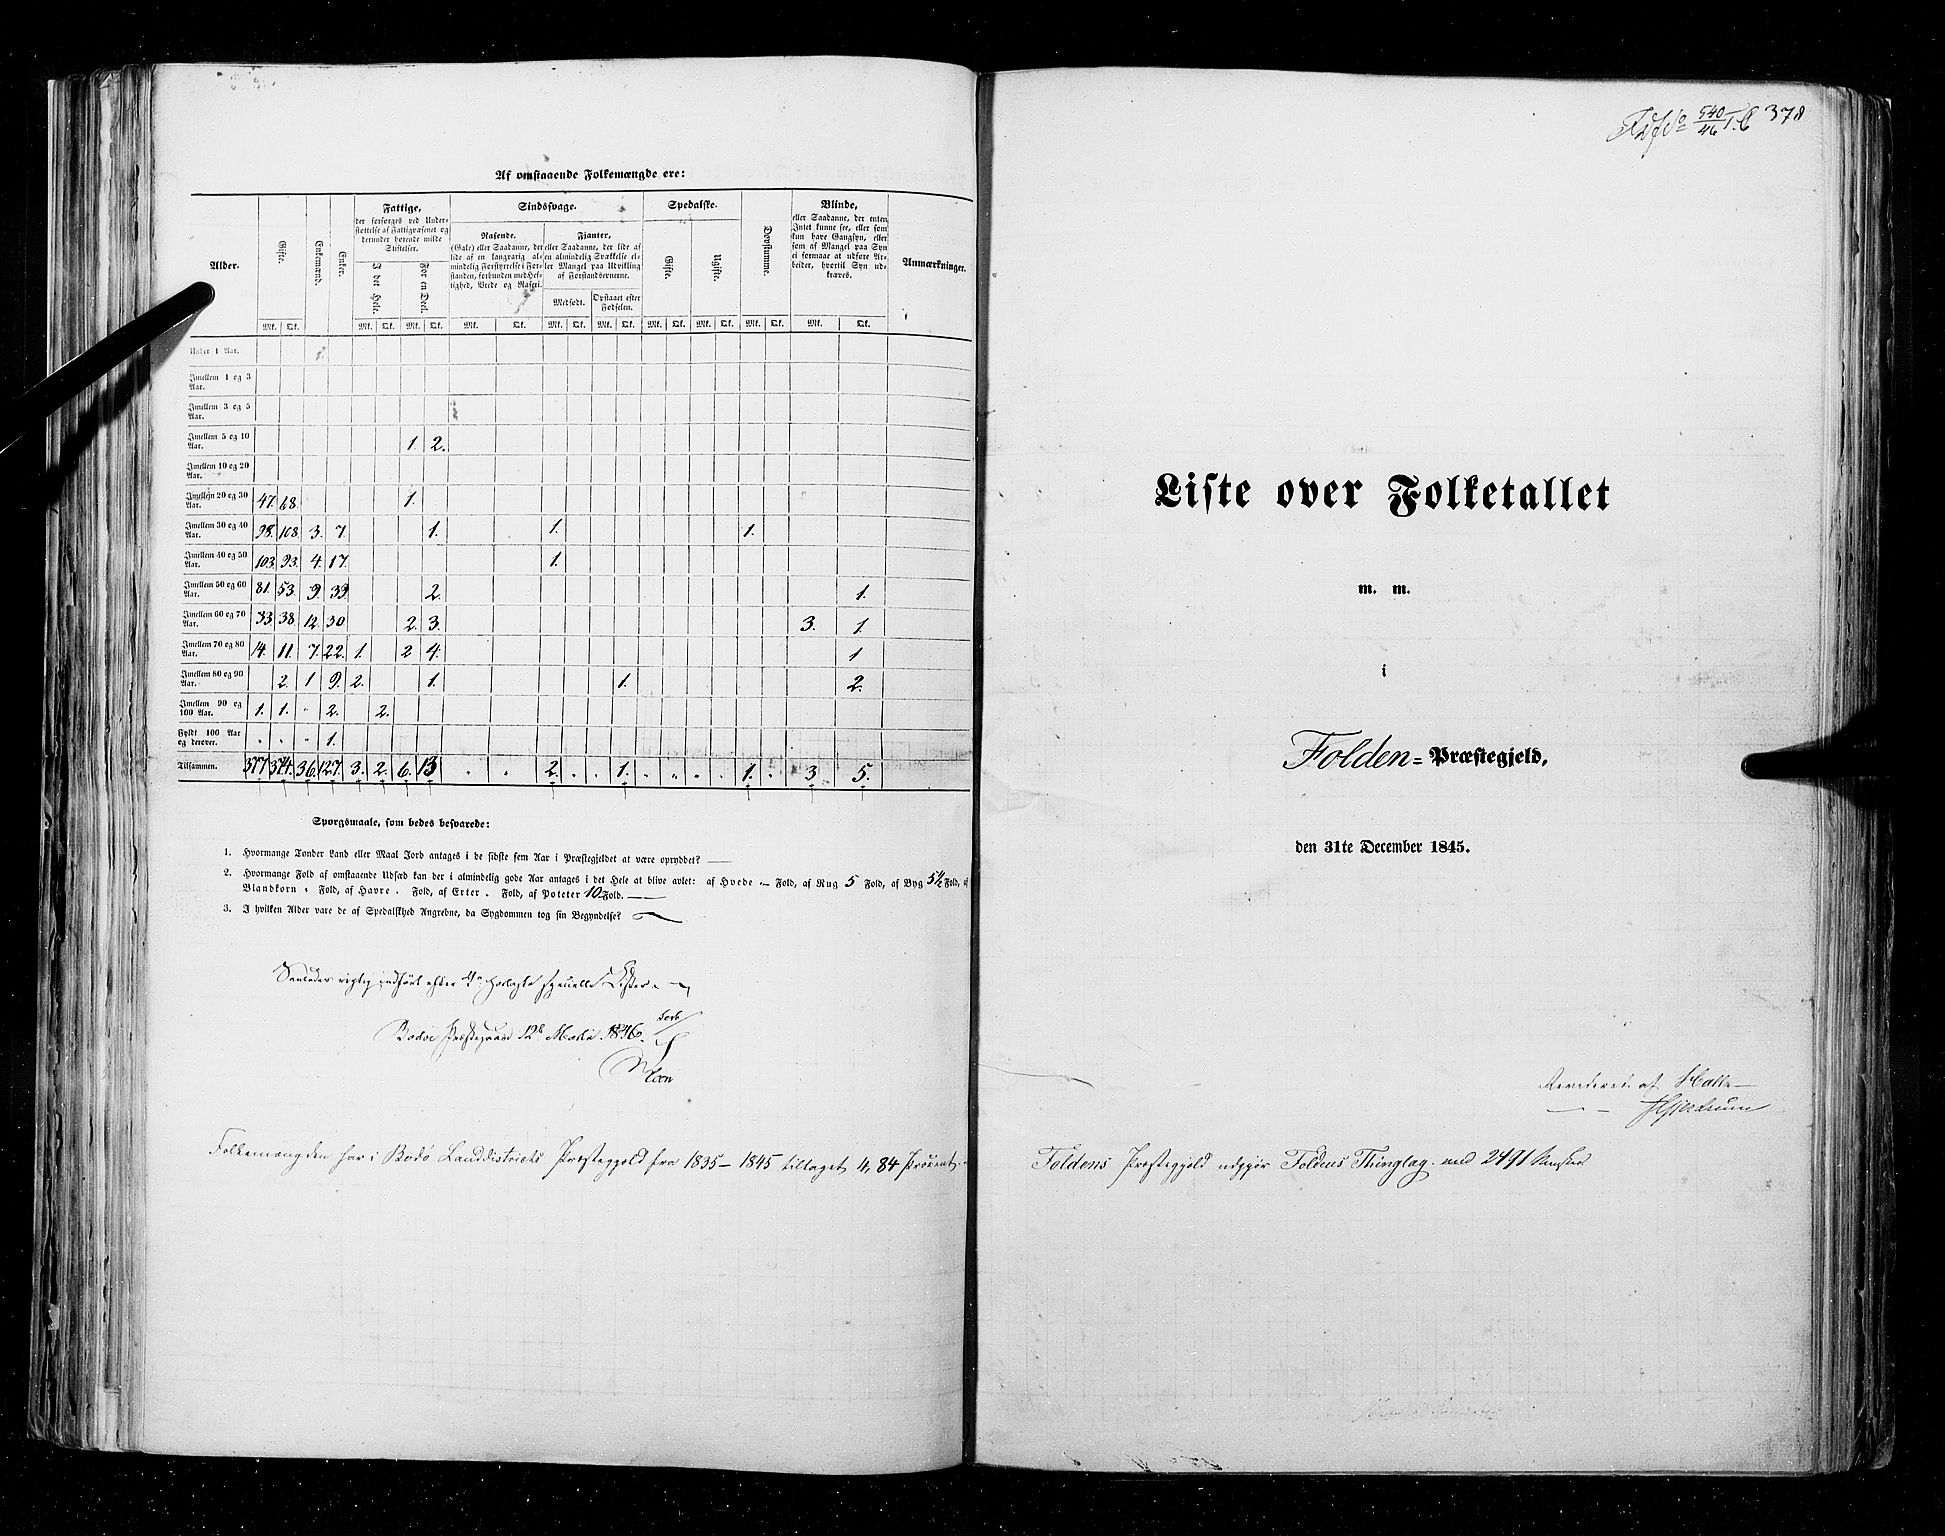 RA, Folketellingen 1845, bind 9B: Nordland amt, 1845, s. 378